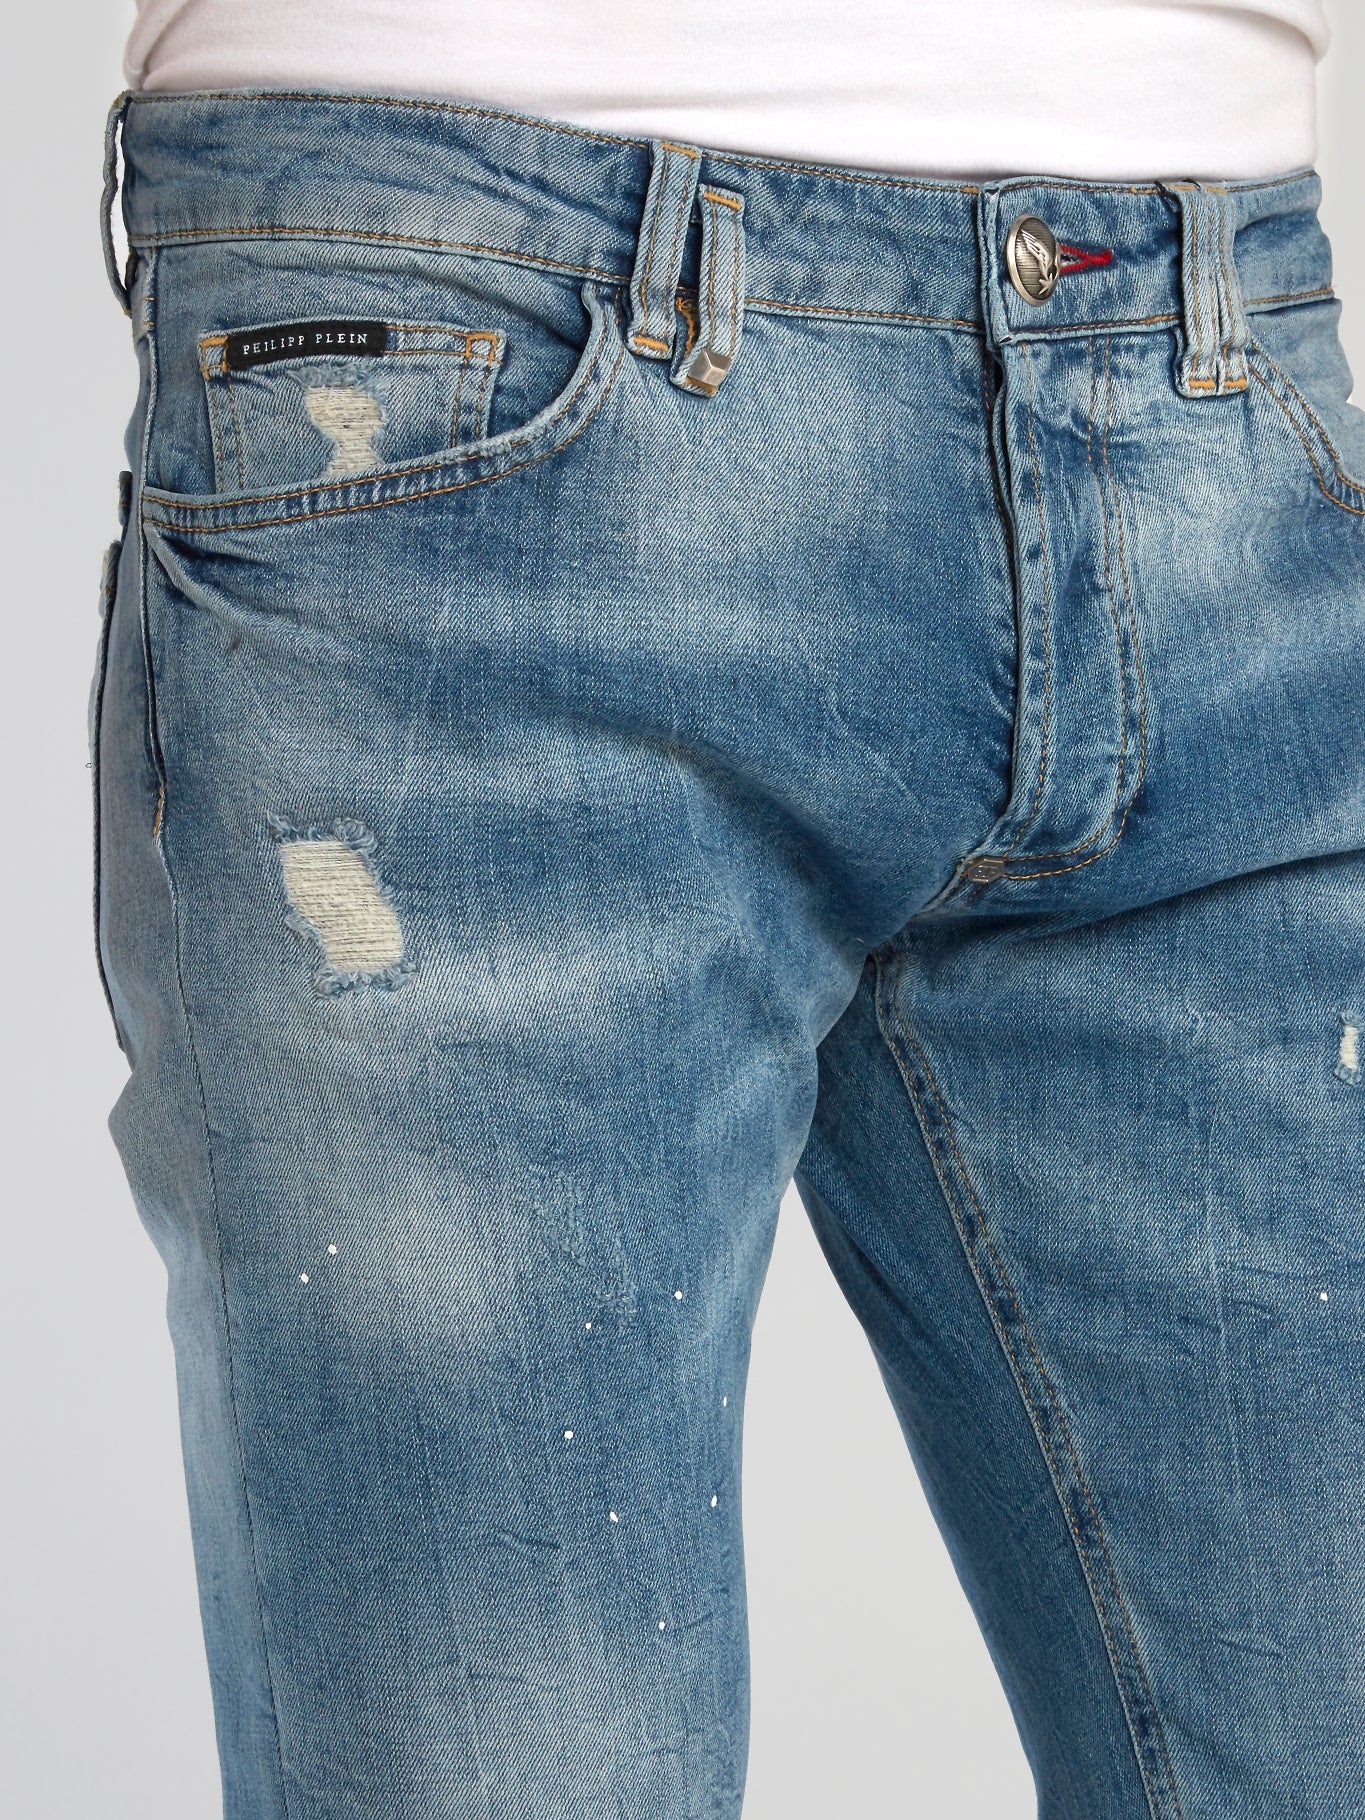 Acid Wash Distressed Denim Jeans